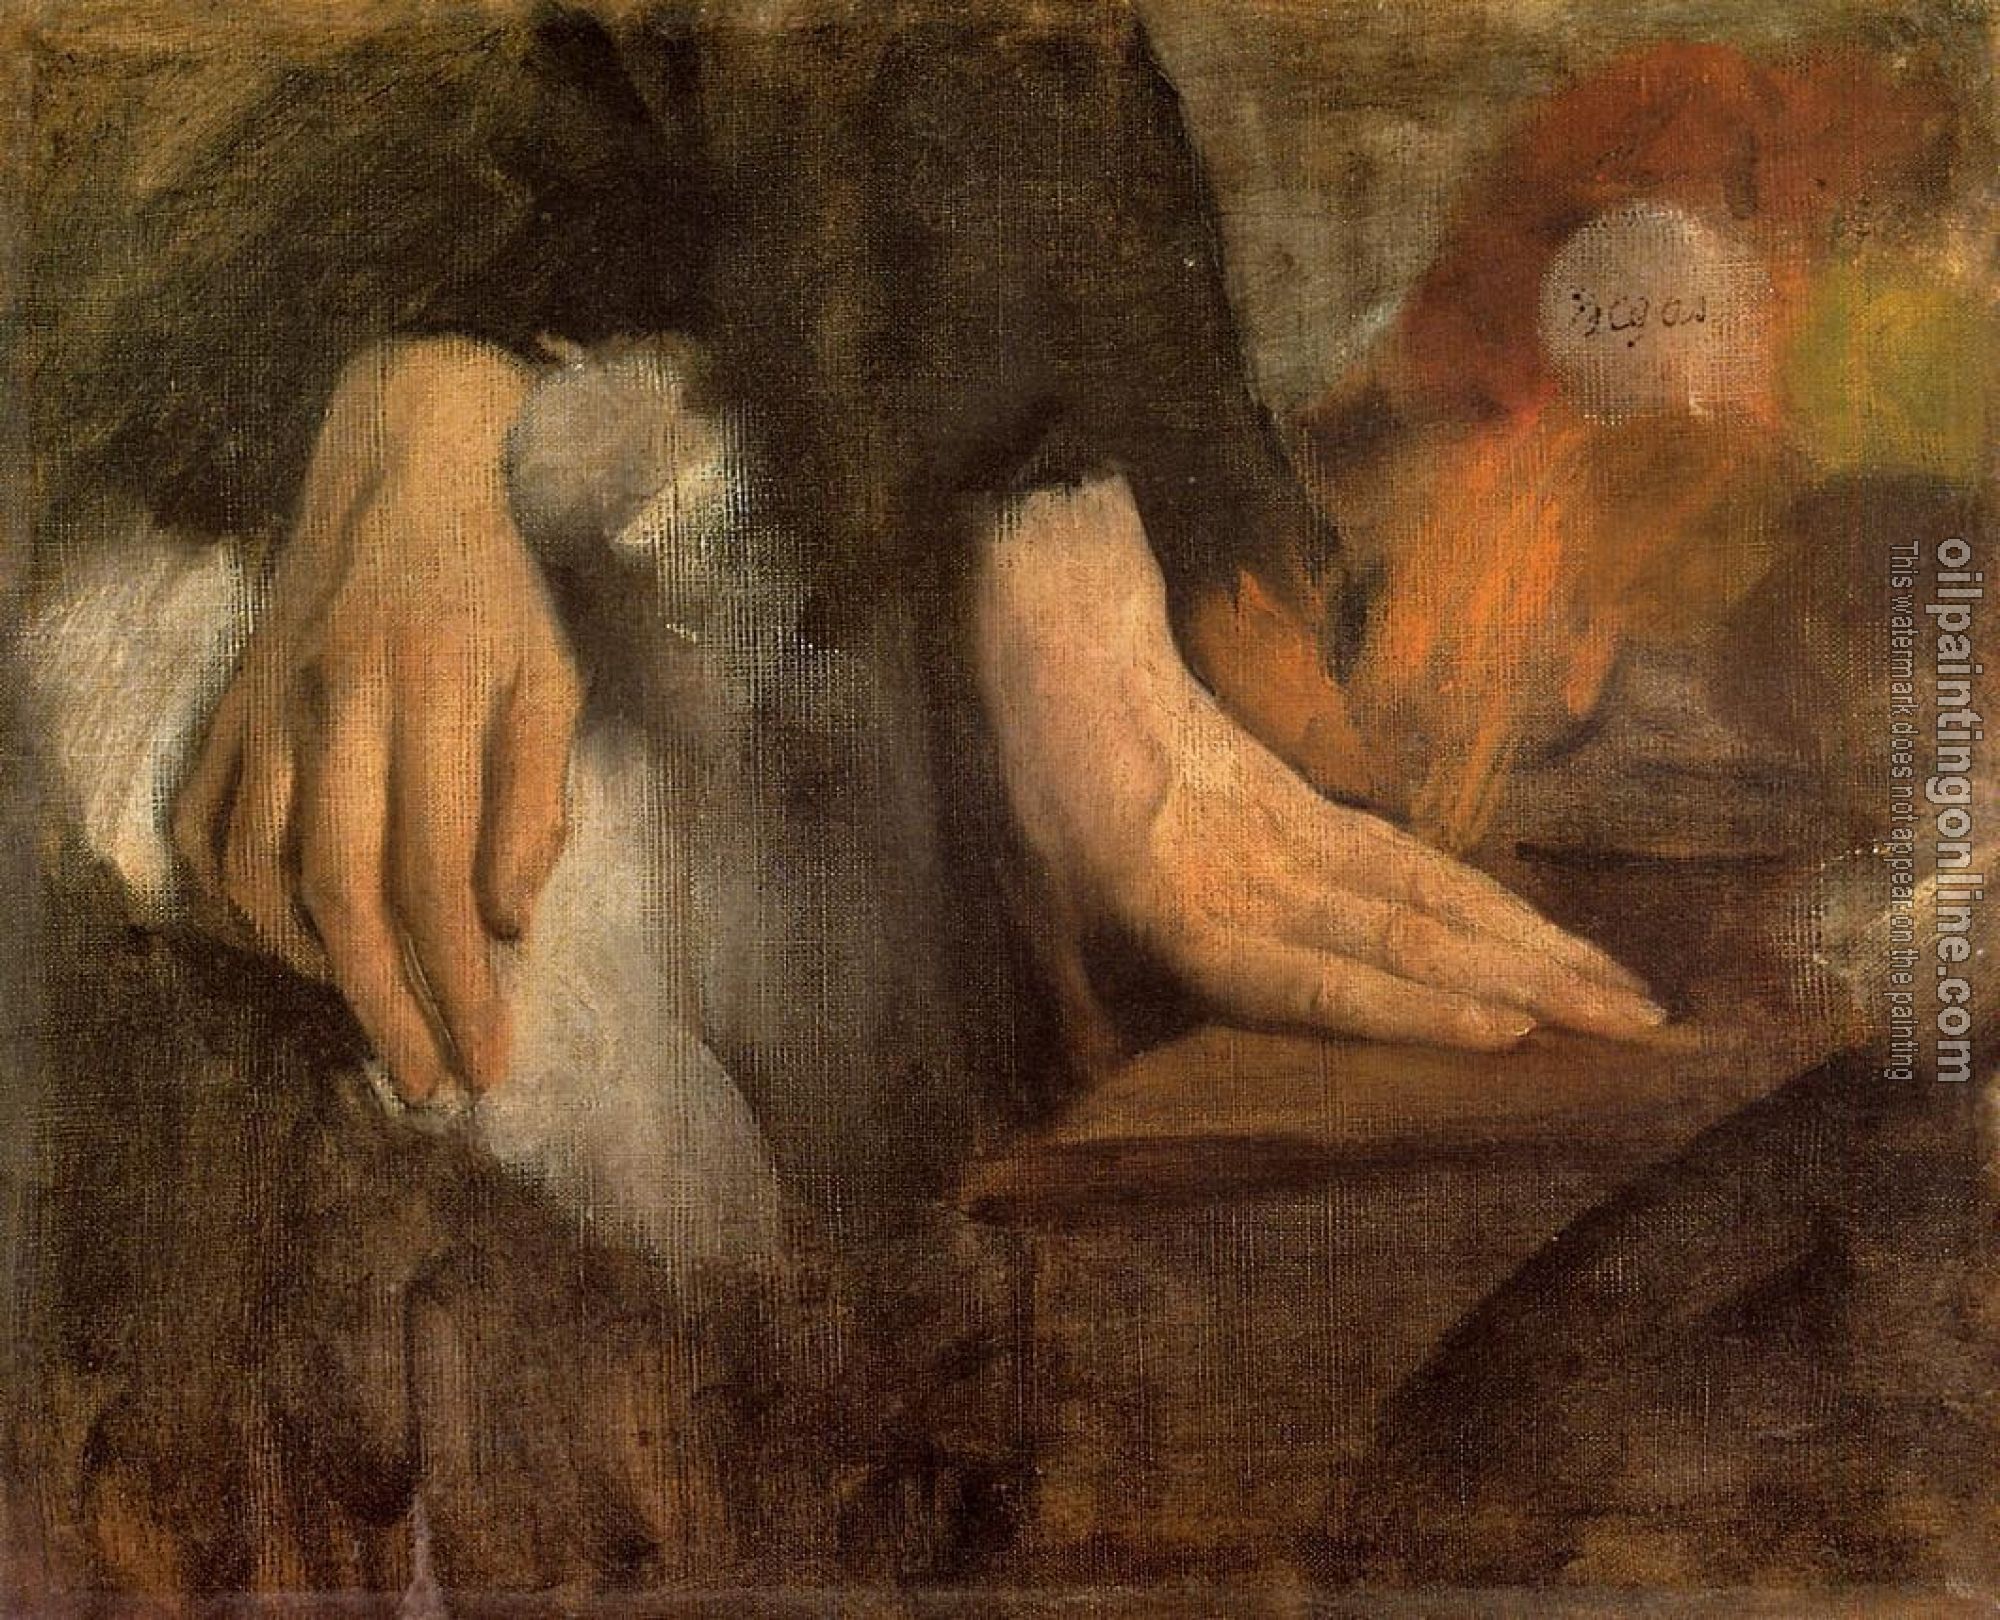 Degas, Edgar - Study of Hands